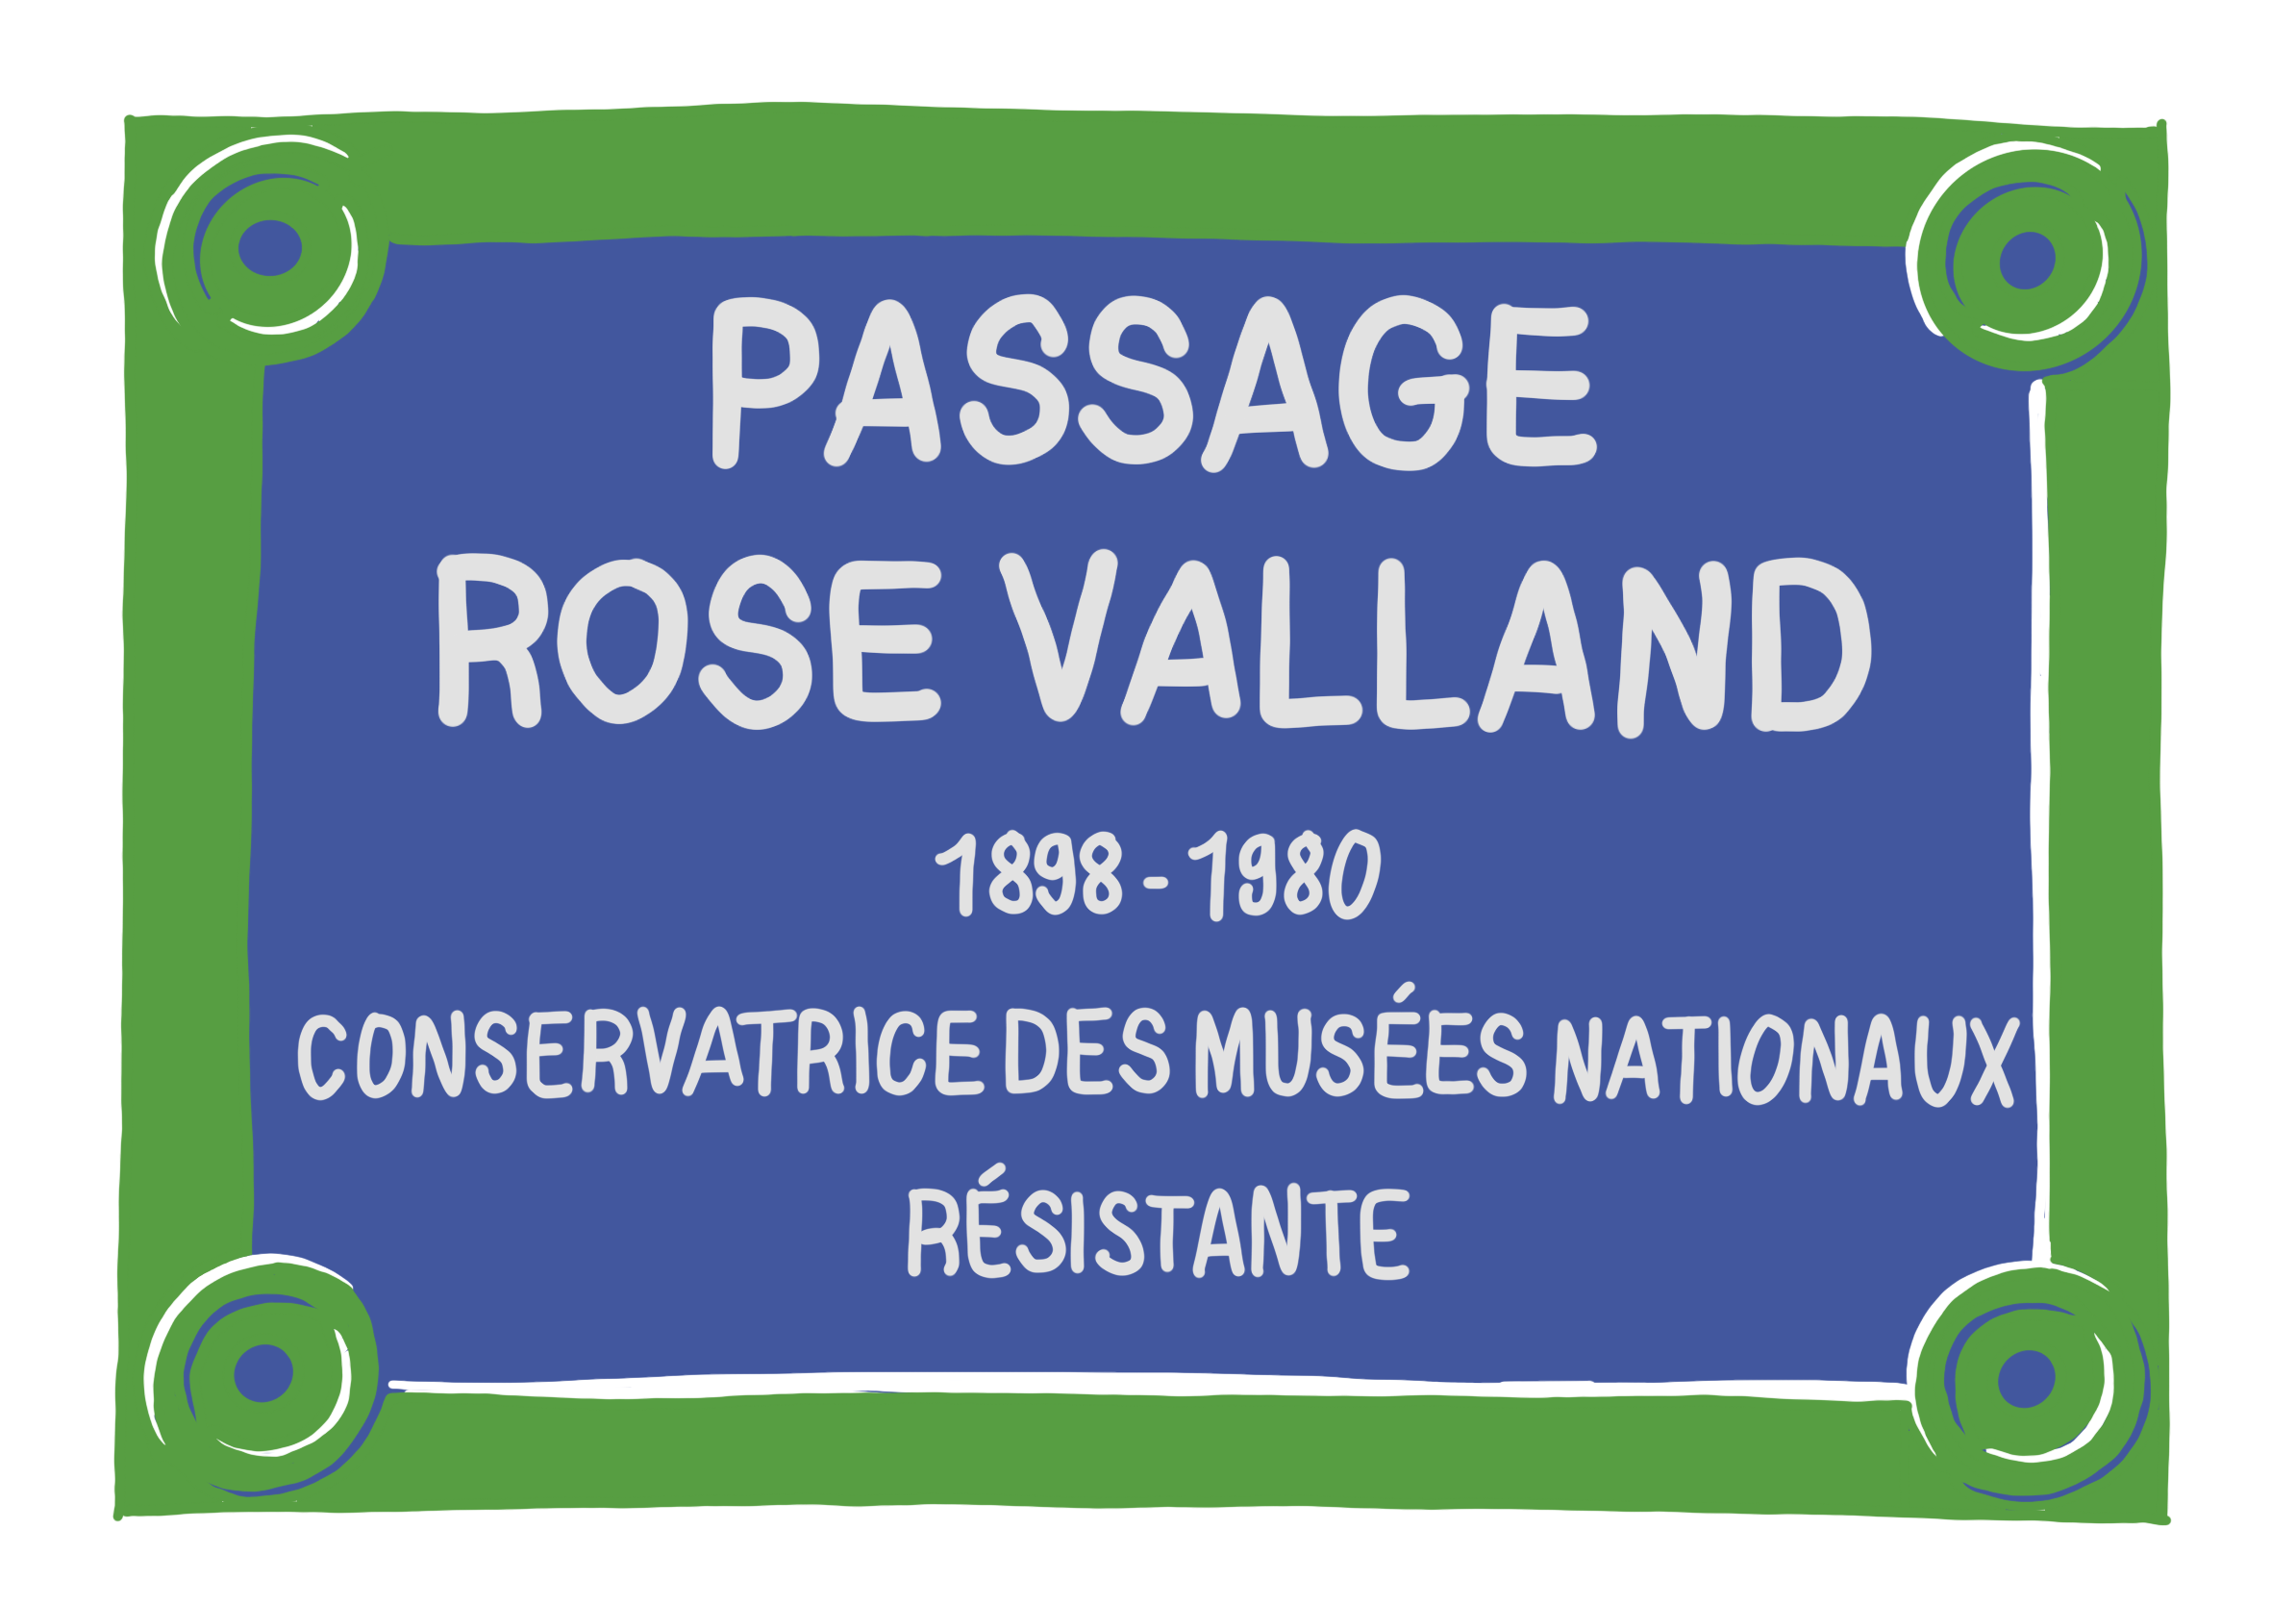 Passage Rose Valland